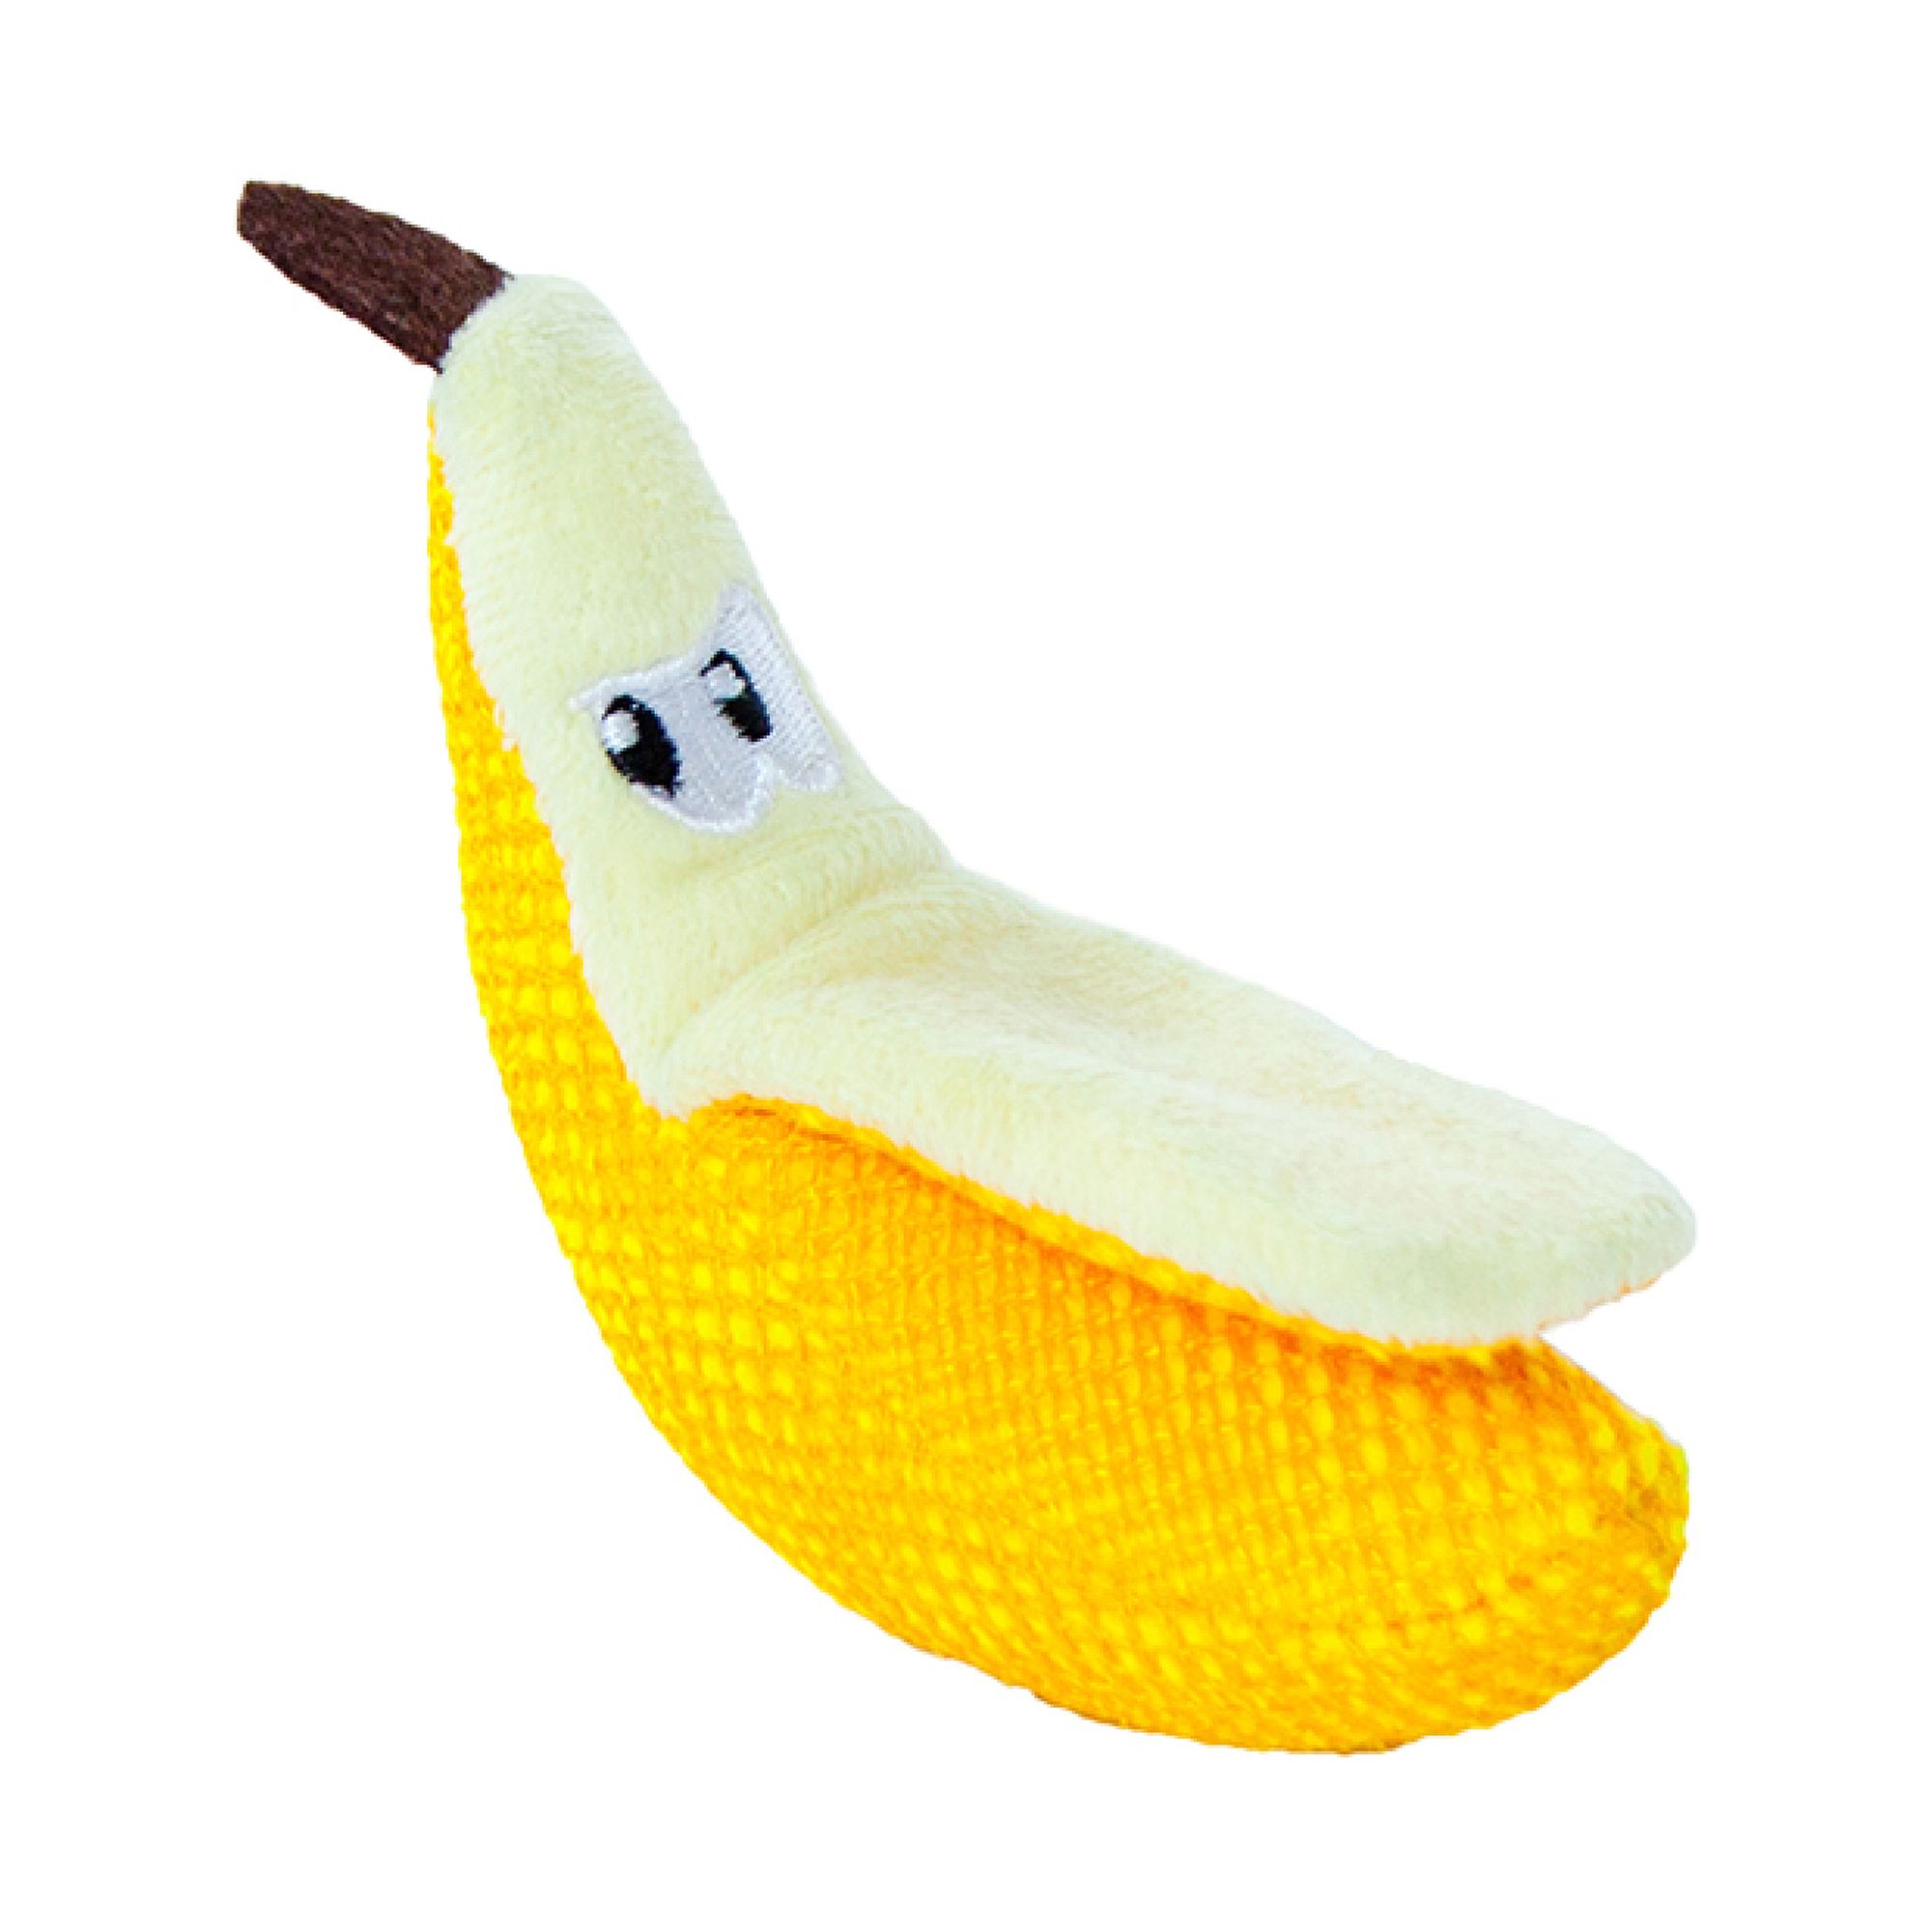 banana teething toy